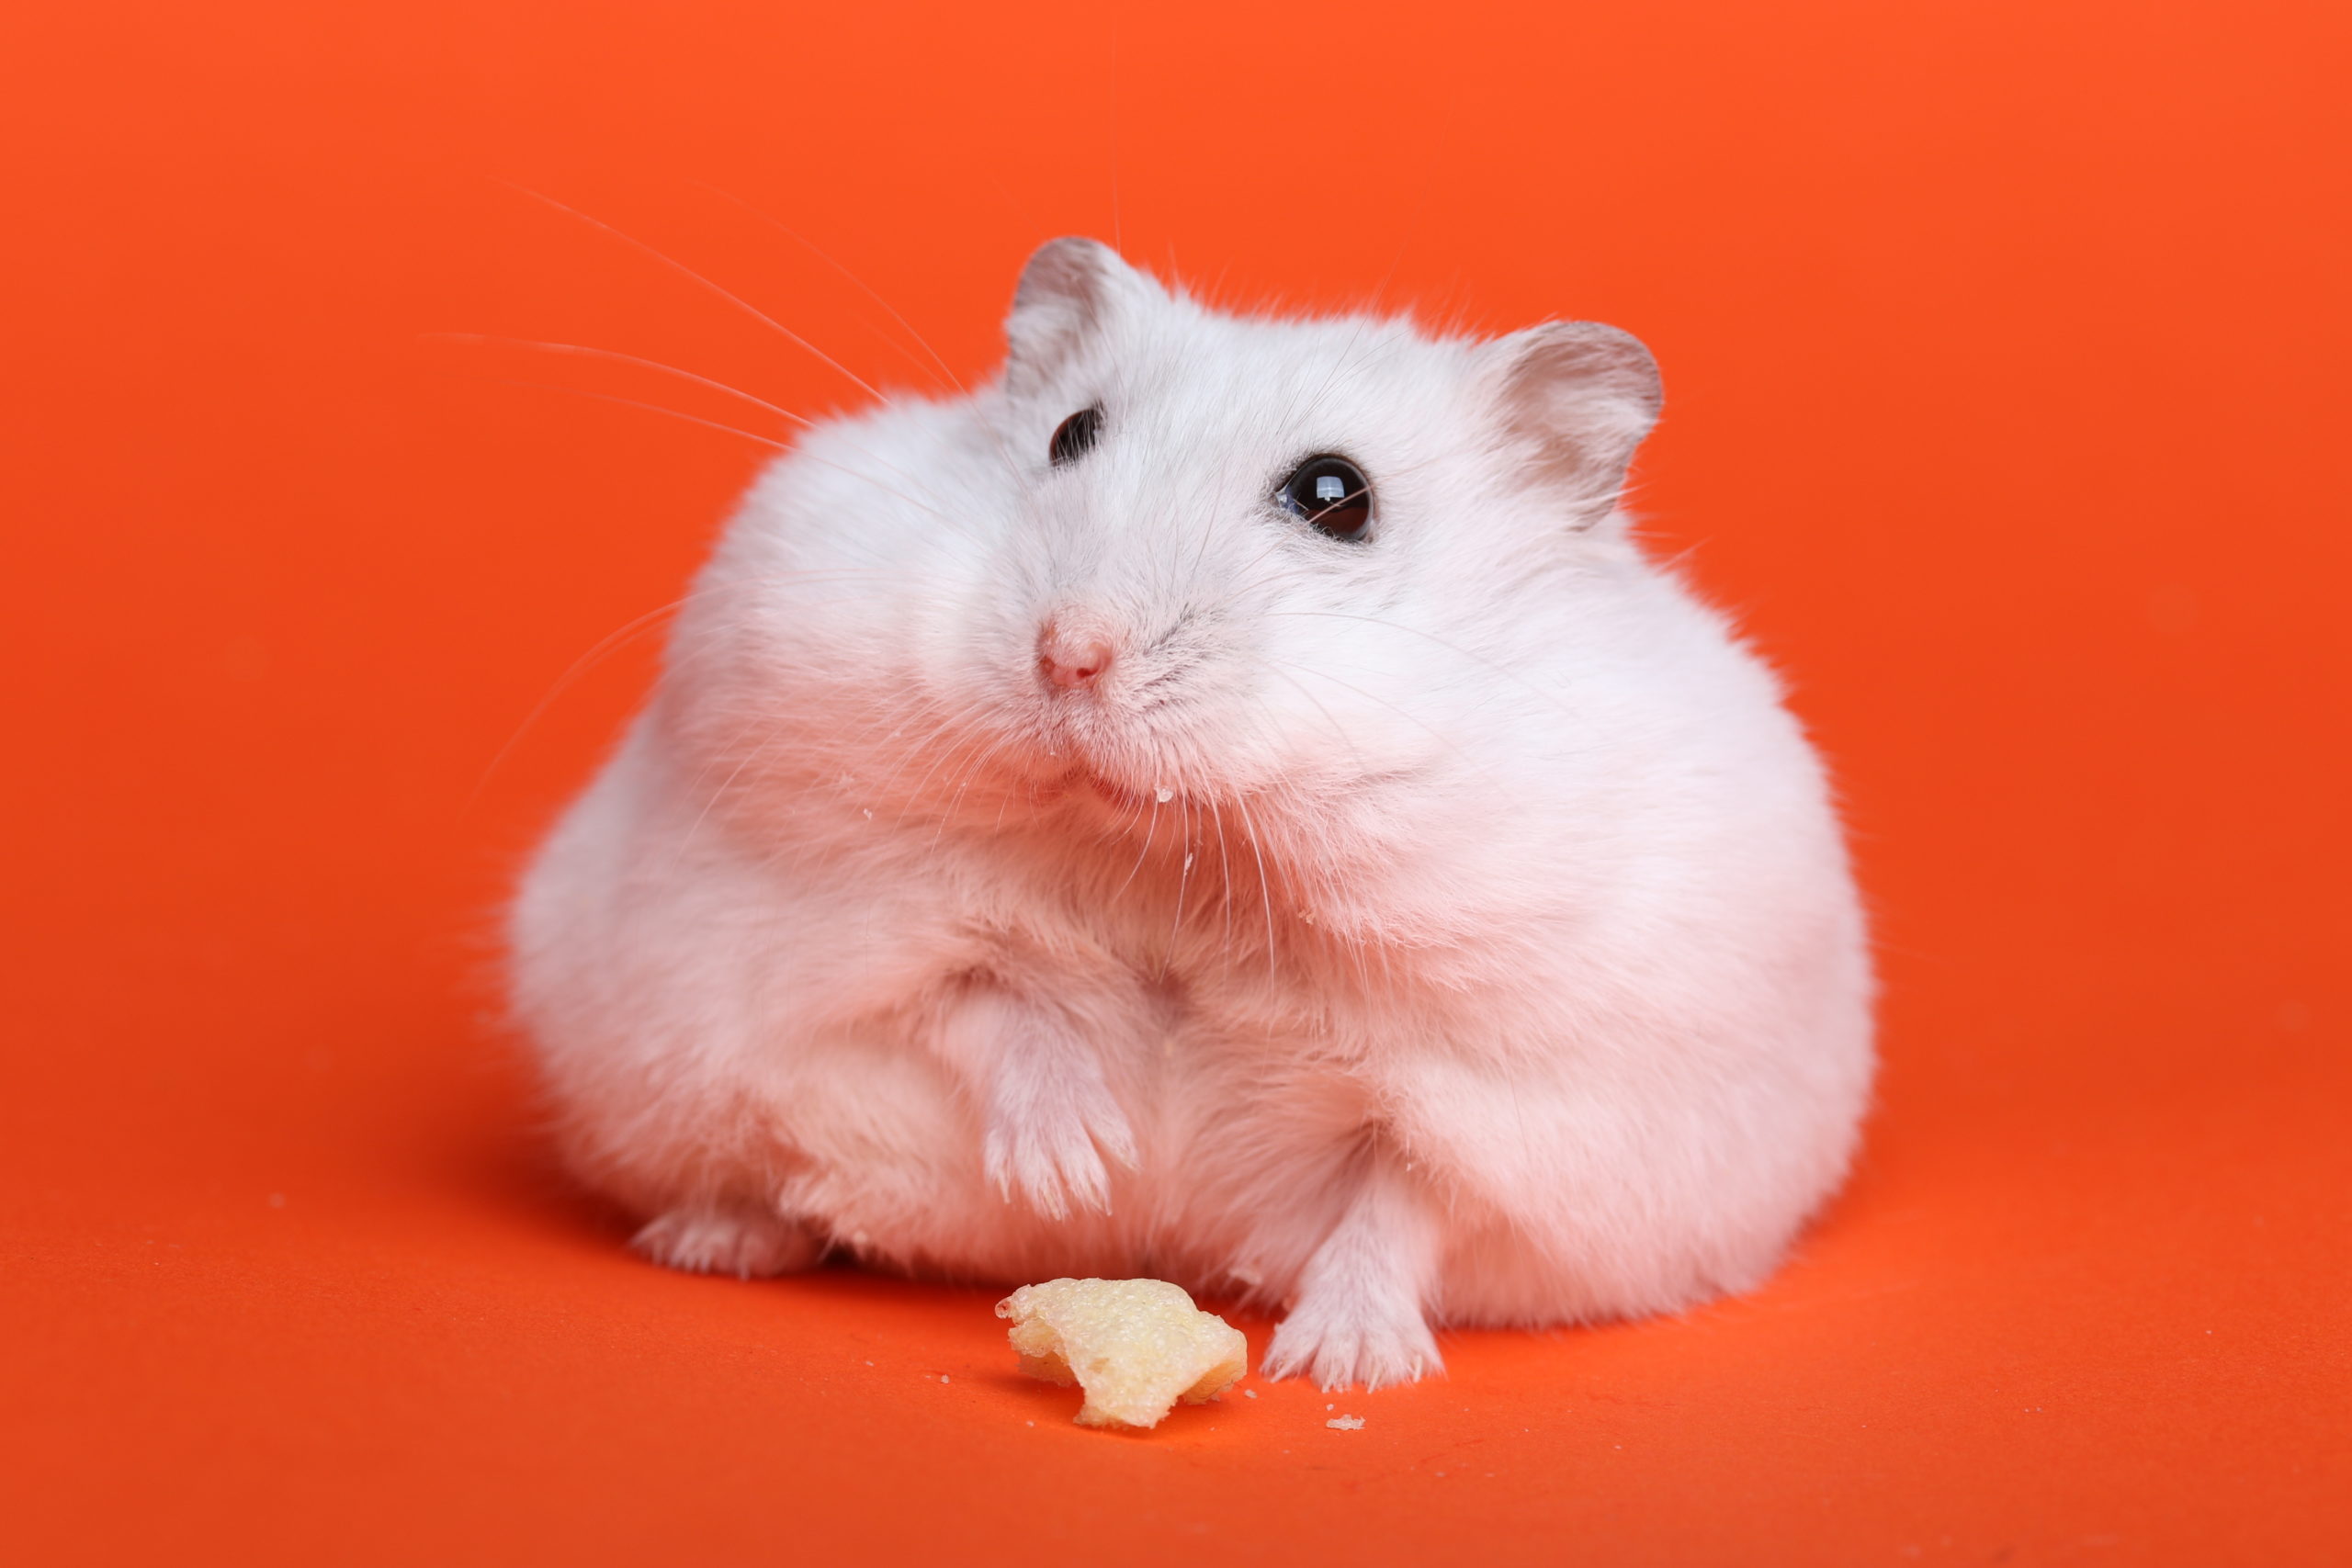 Hamster with stuffed cheeks